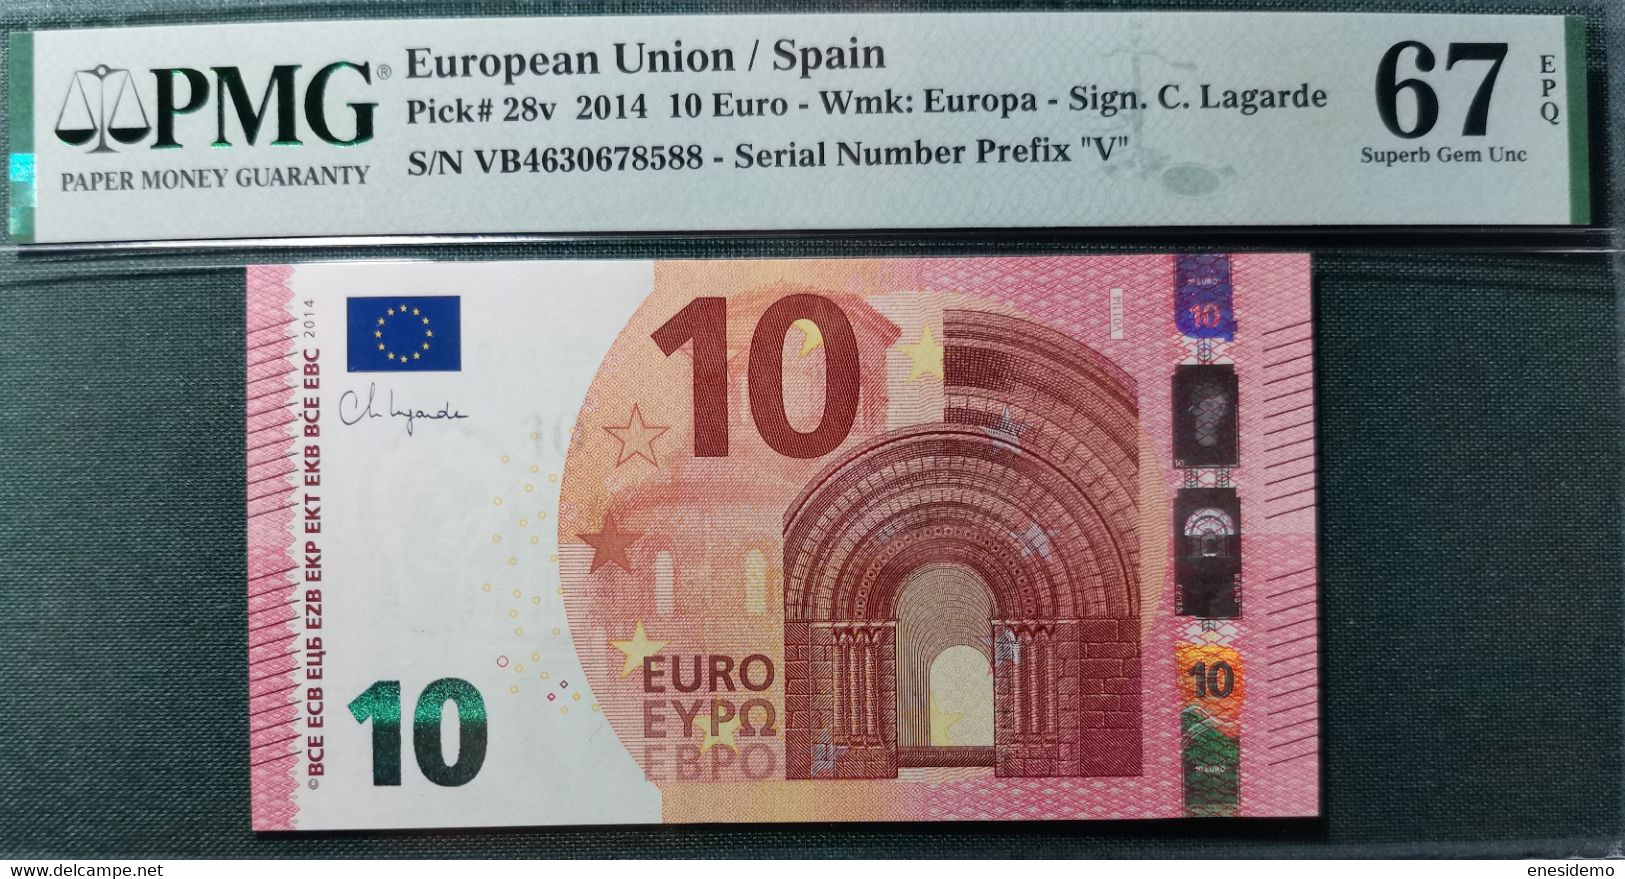 Europa - 10 Euro banknote UNC, Europa series, 2014